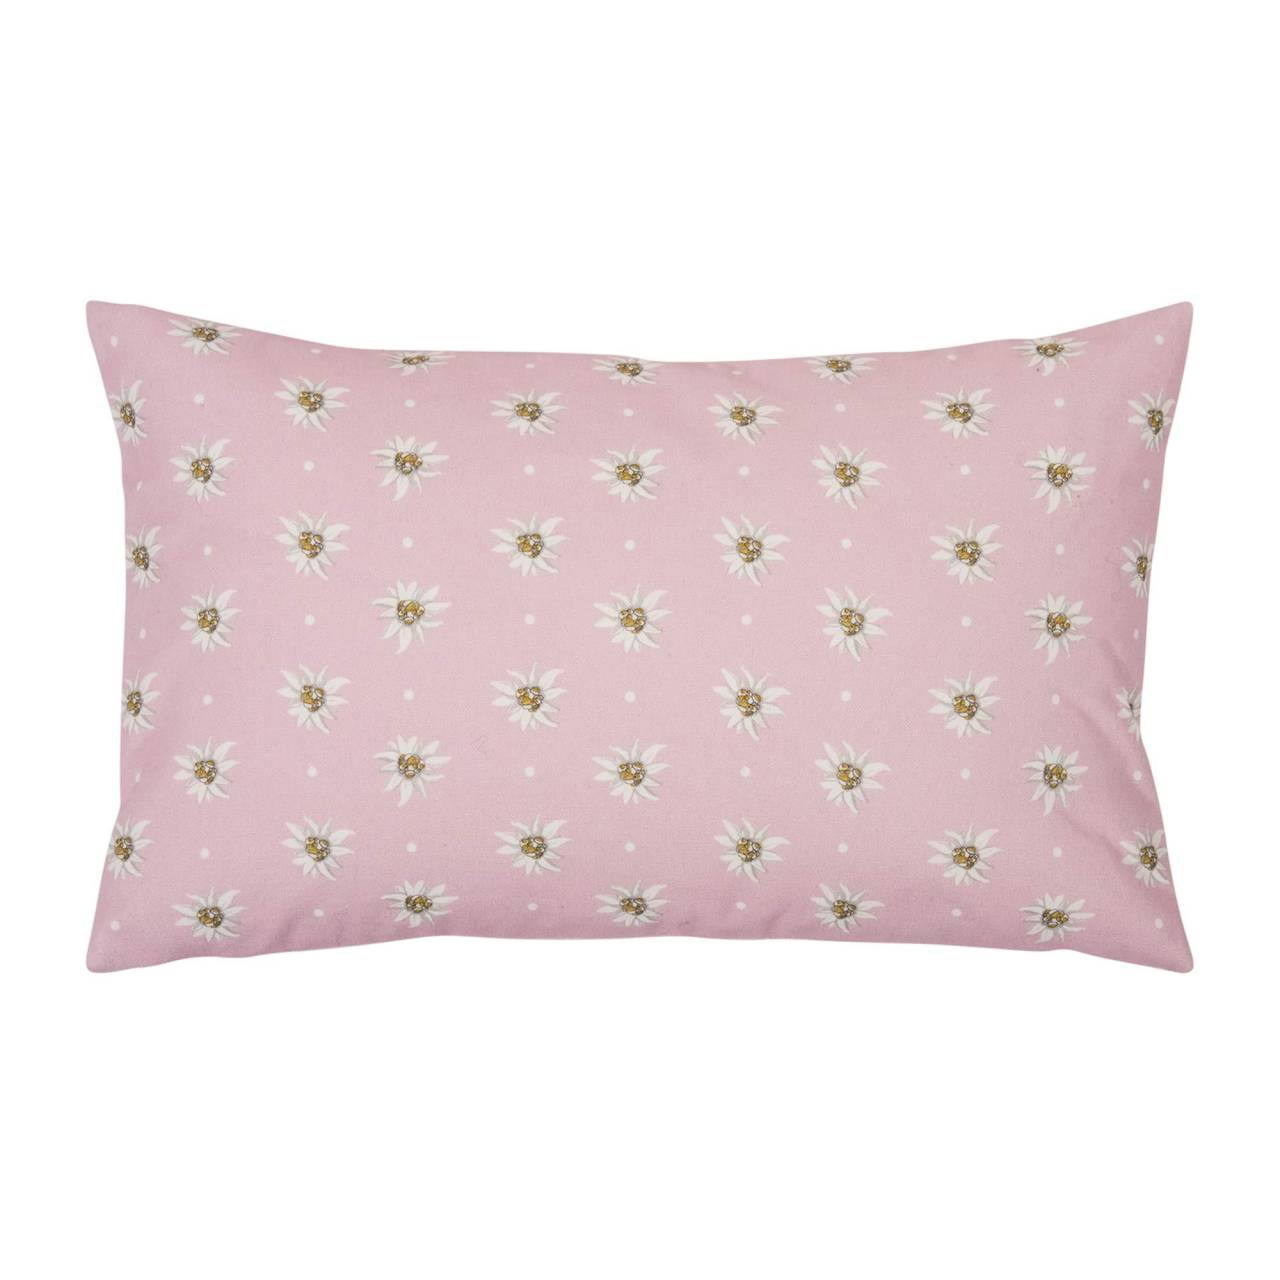 pad Vais Kissenhülle Kissenbezug 30 x 50cm Edelweiß rosa von pad home design concept